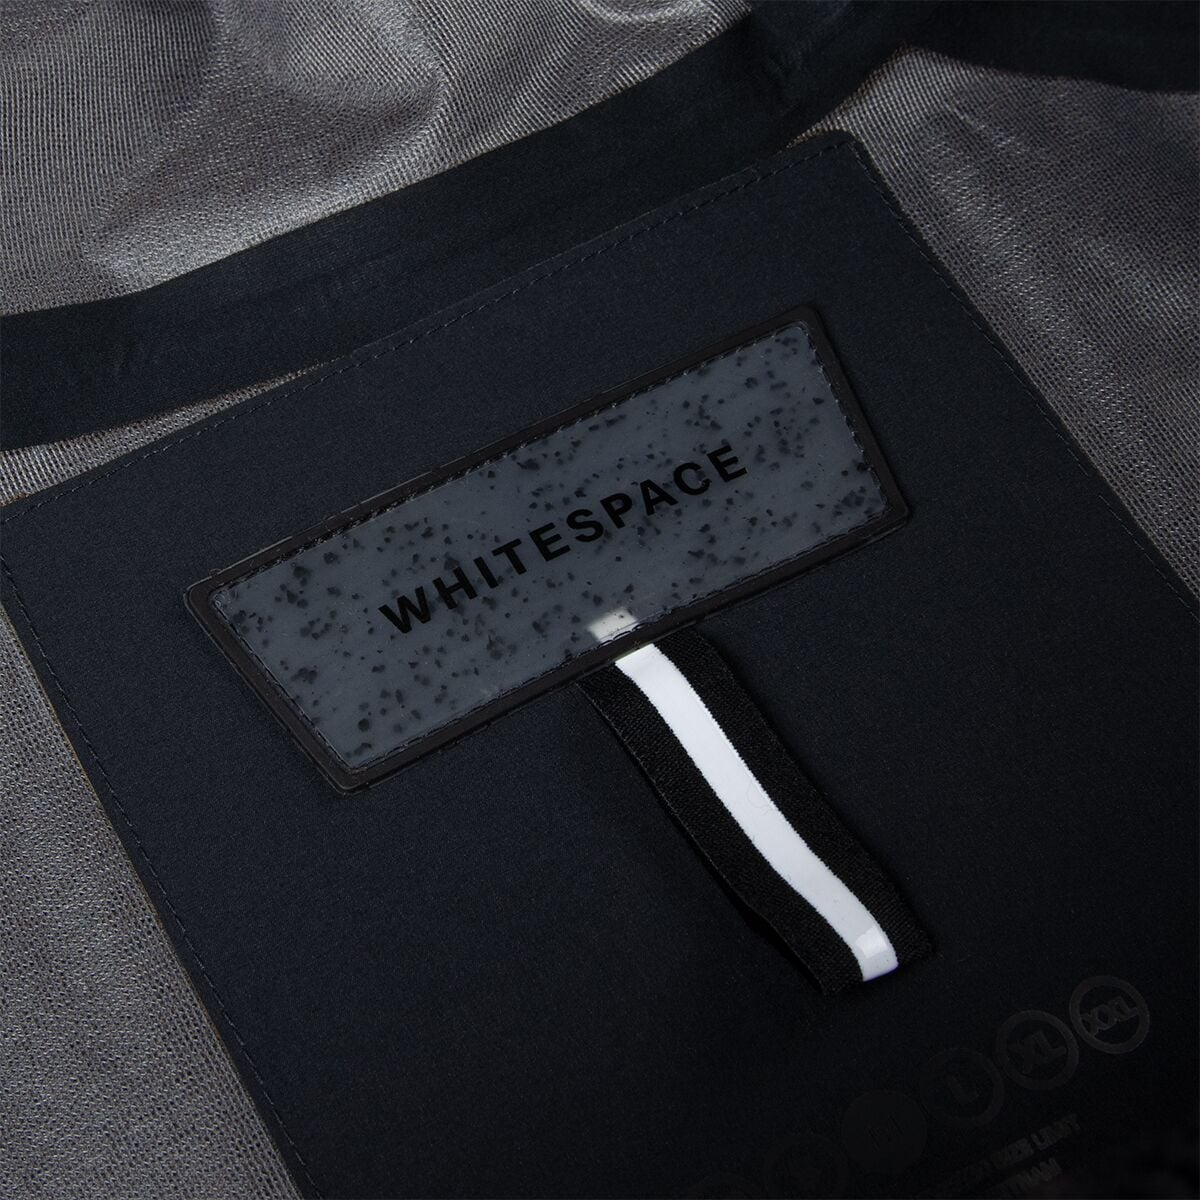 Whitespace Apres Polar Fleece Jacket - Men's Faded Camo Blue/Black, M